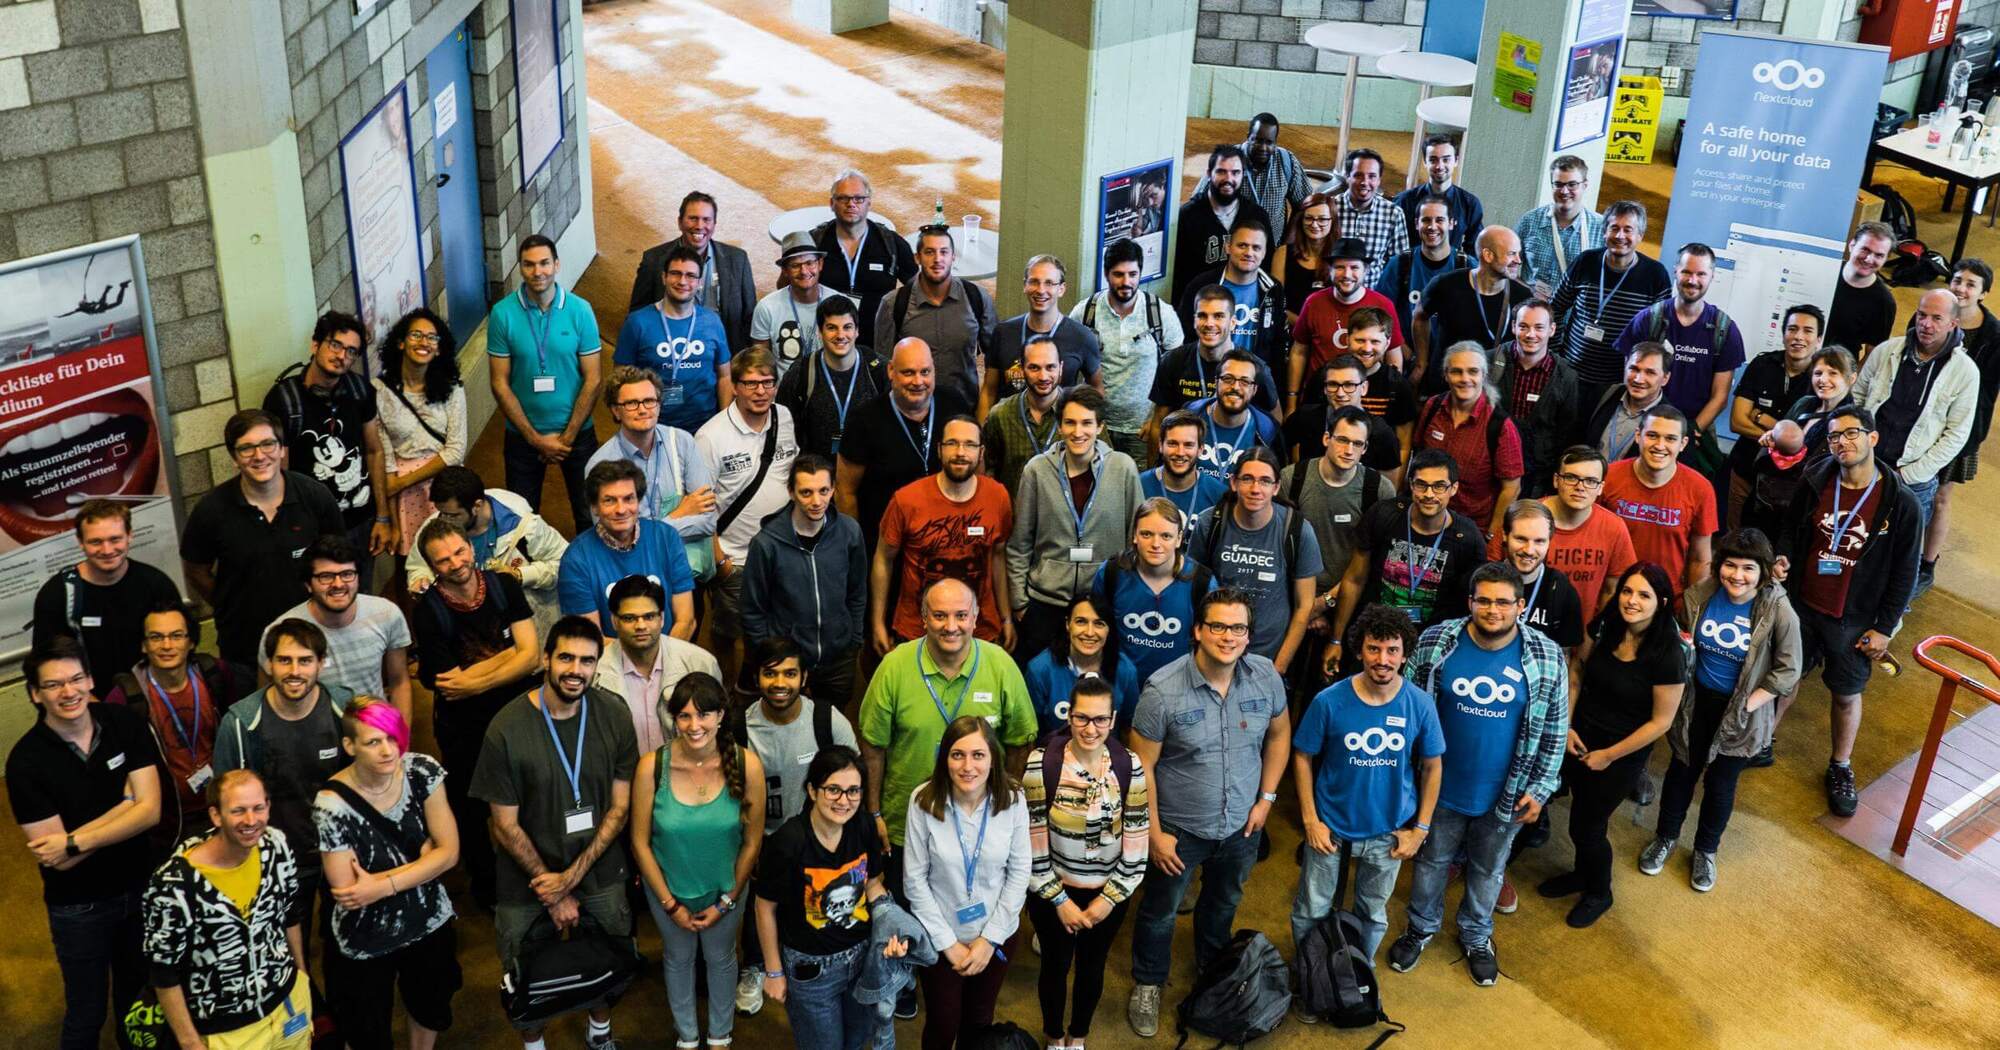 Nextcloud conference - group photo